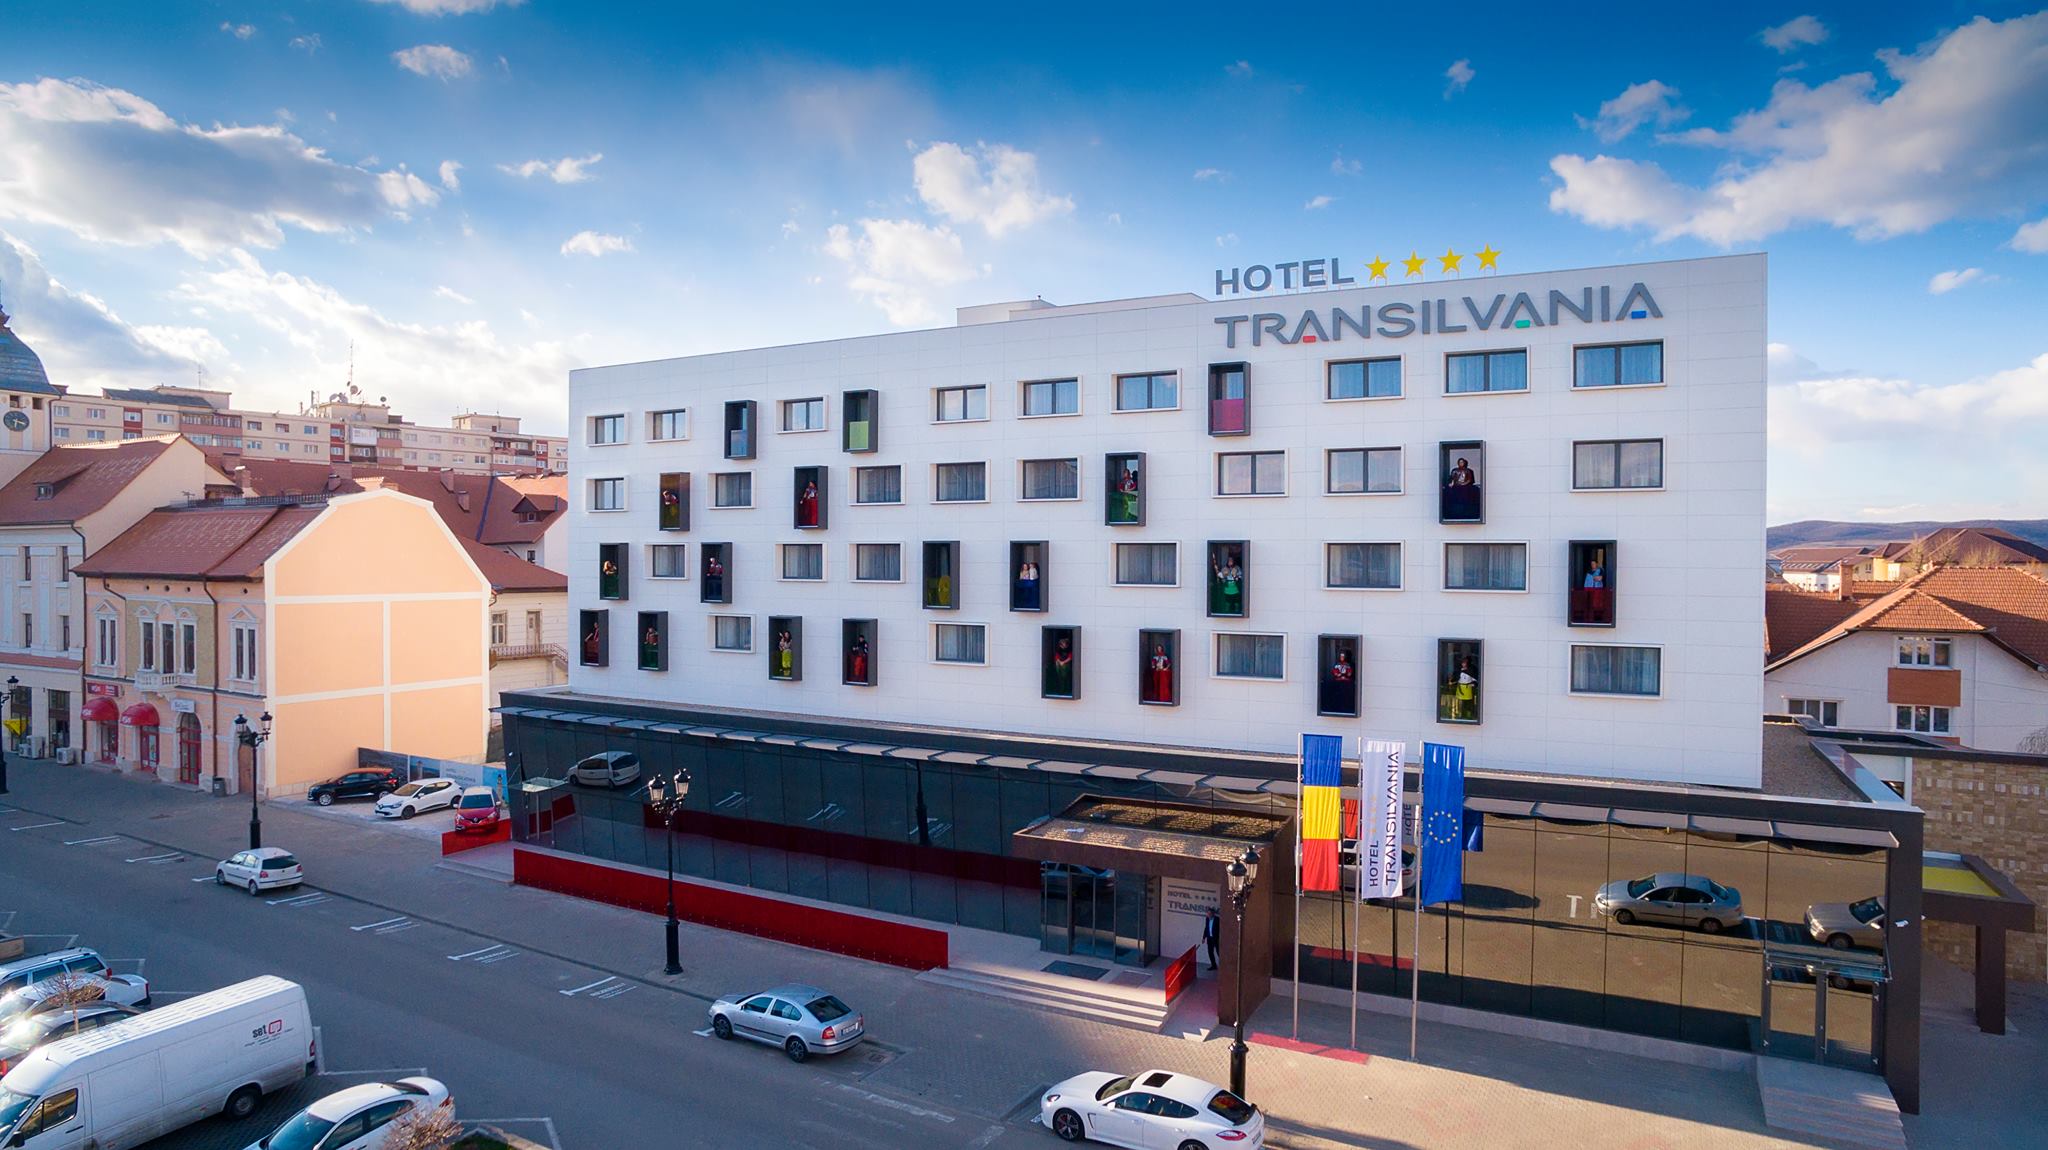 Hotel Transilvania